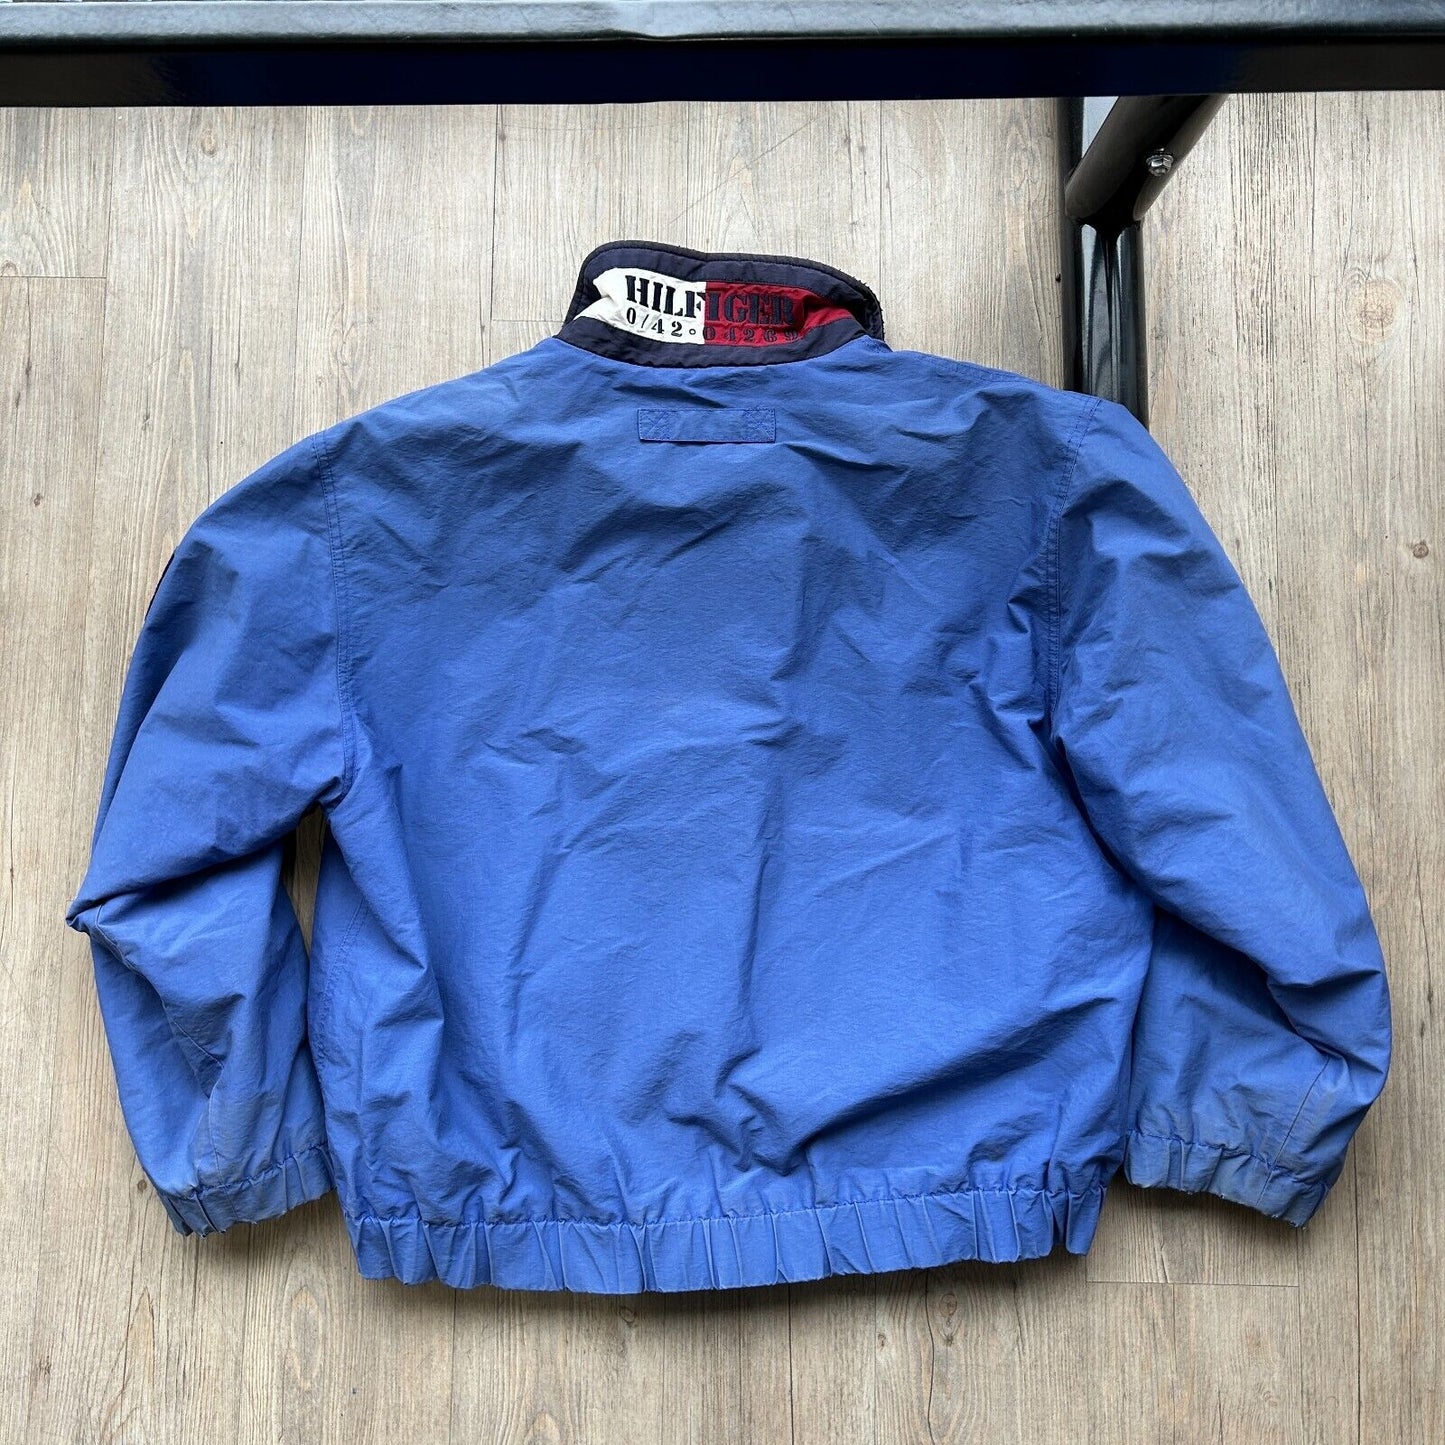 VINTAGE 90s | Tommy Hilfiger Blue Full Zip Fleece Lined Jacket sz M Adult